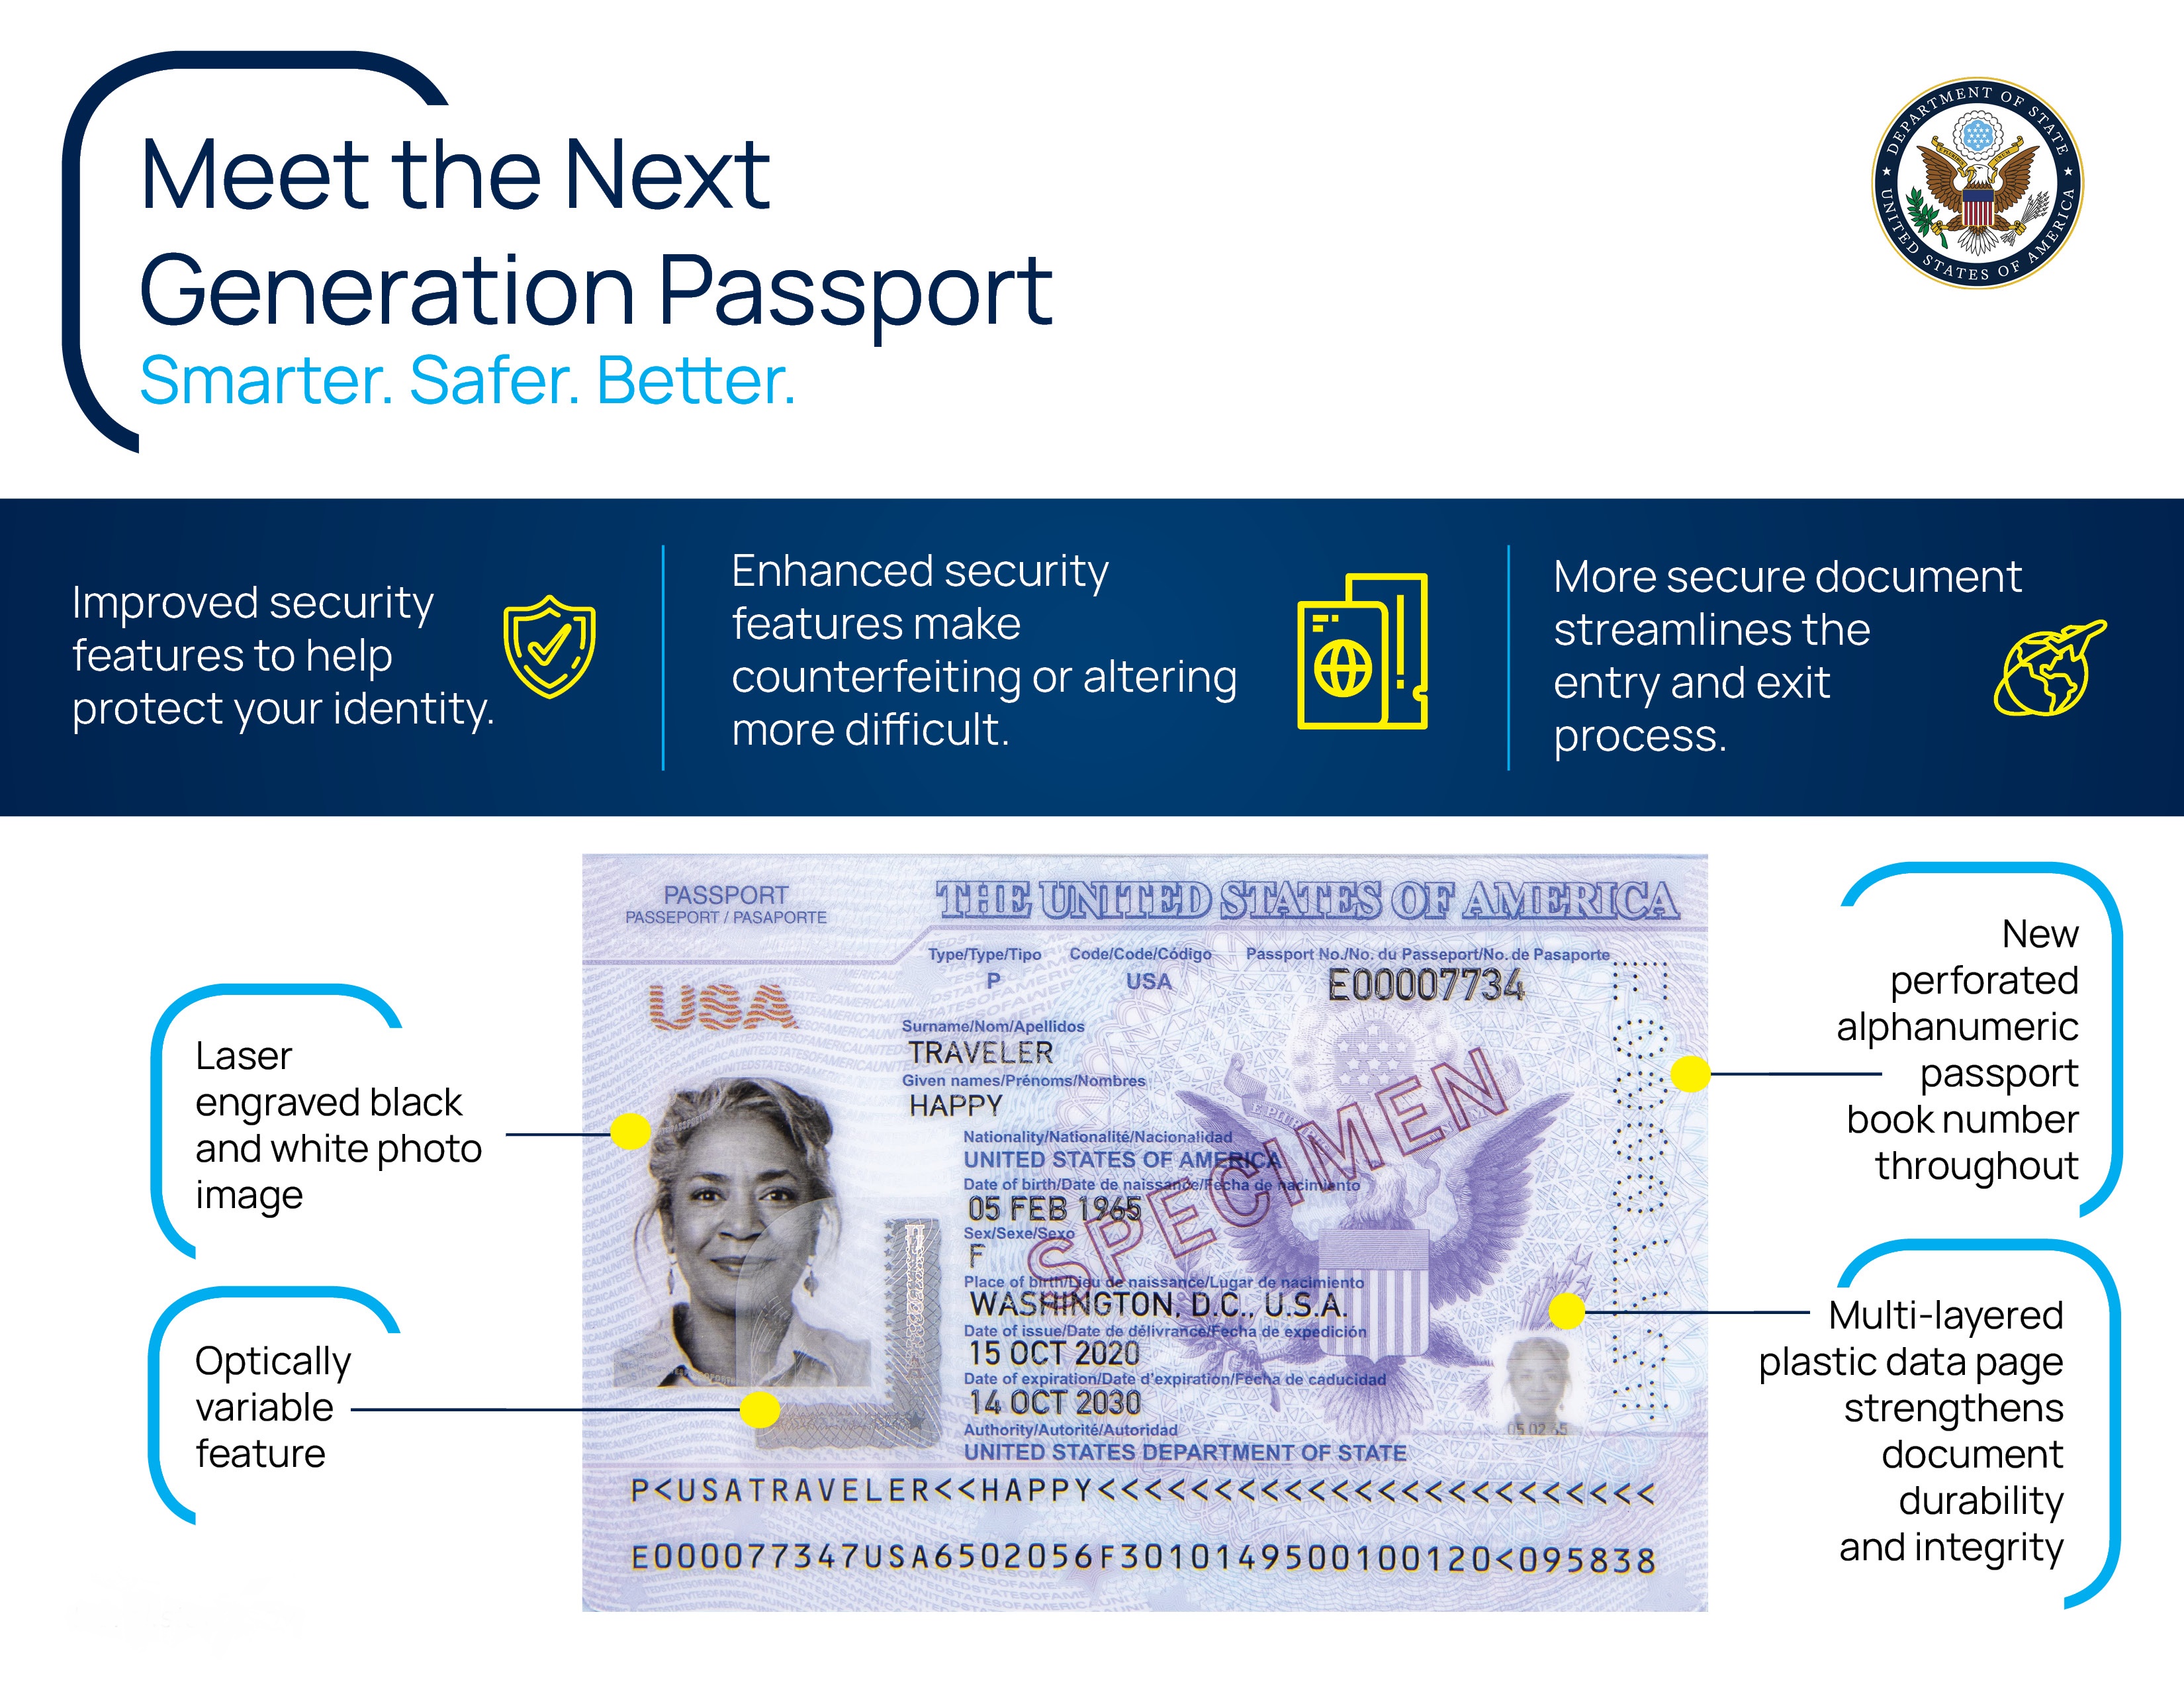 Information about the Next Generation U.S. Passport